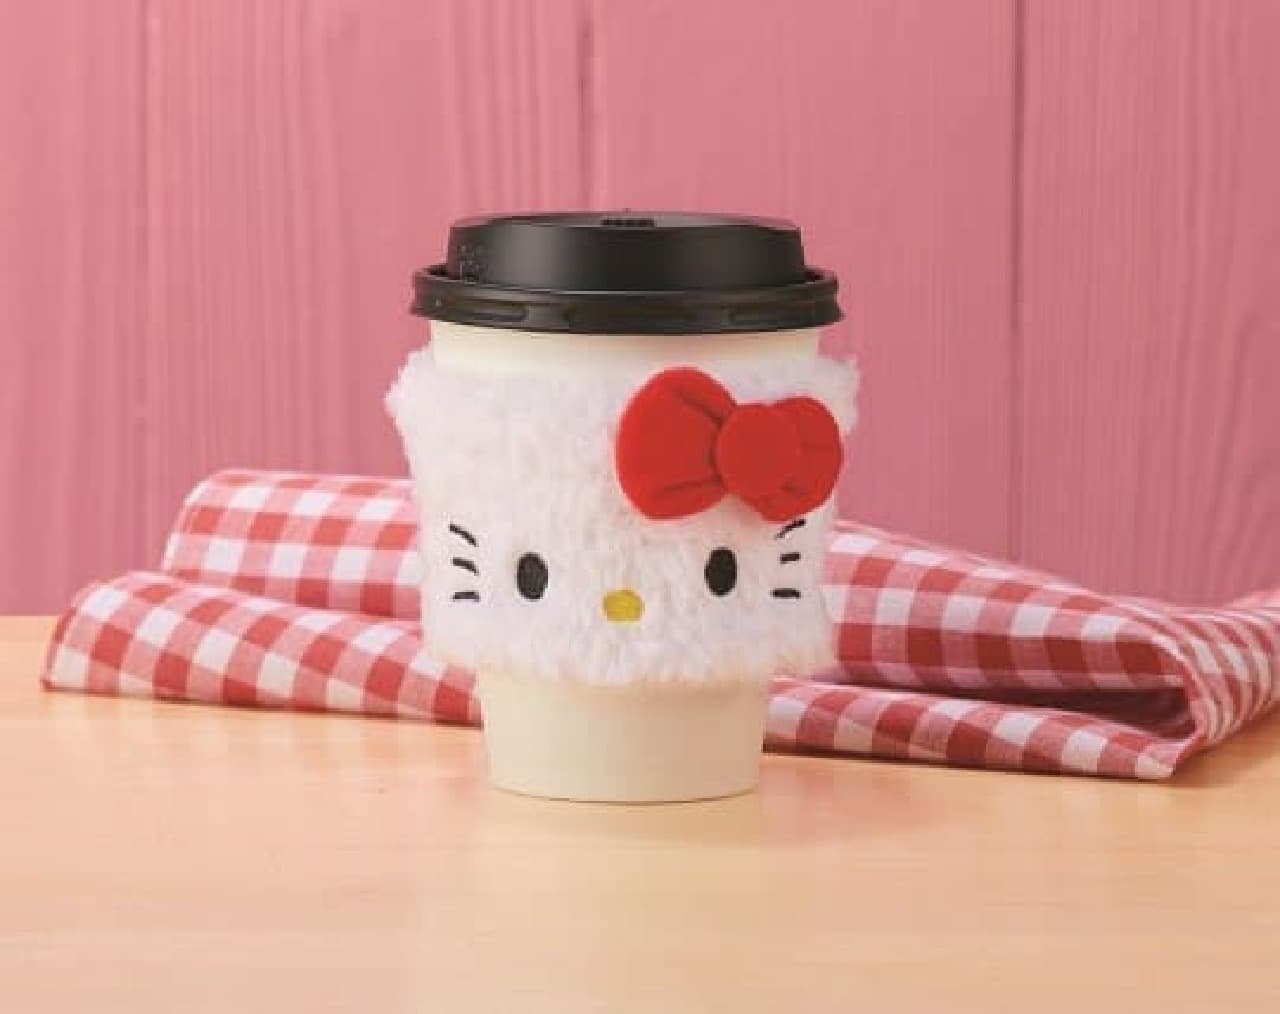 Lawson "Hello Kitty Sleeved Hot Latte"